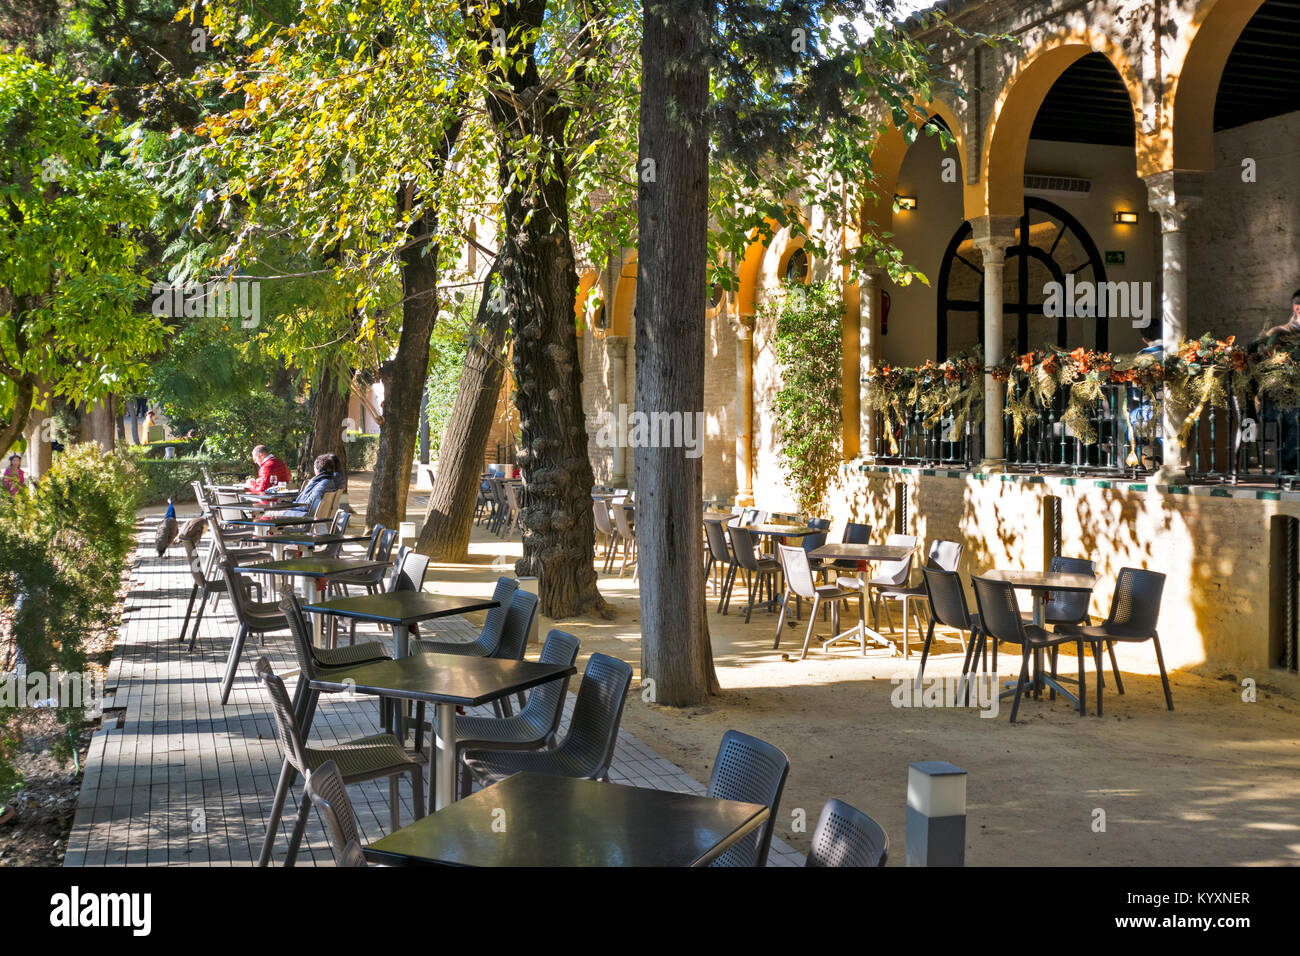 ALCAZAR SEVILLE SPAIN THE FORMAL GARDENS  AND RESTAURANT CAFE AREA WITH PEACOCKS Stock Photo